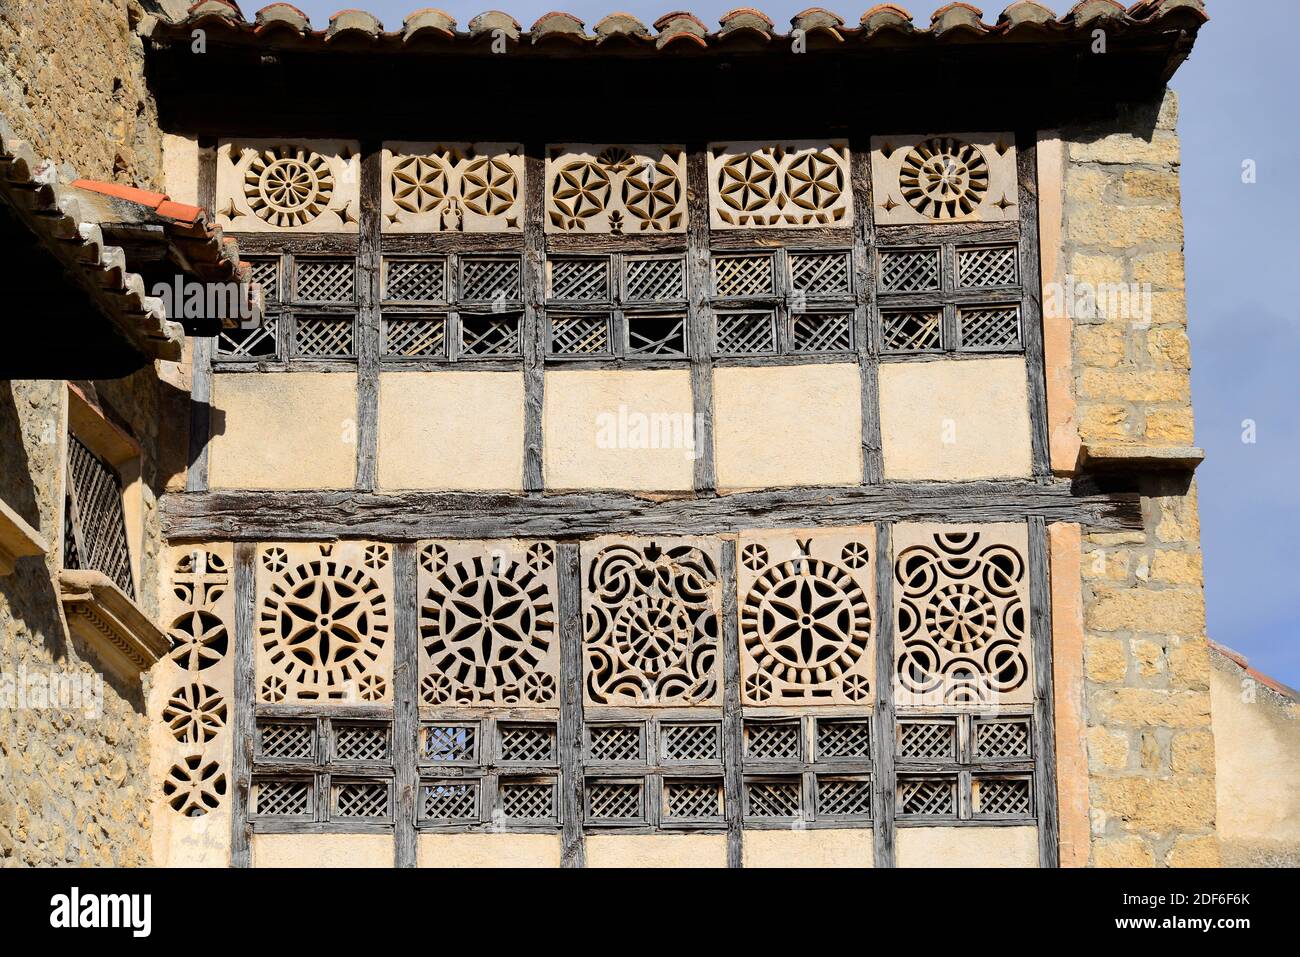 Mirambel, Convento de las Agustinas (jalousie detail). Alto Maestrazgo, Teruel province, Aragon, Spain. Stock Photo